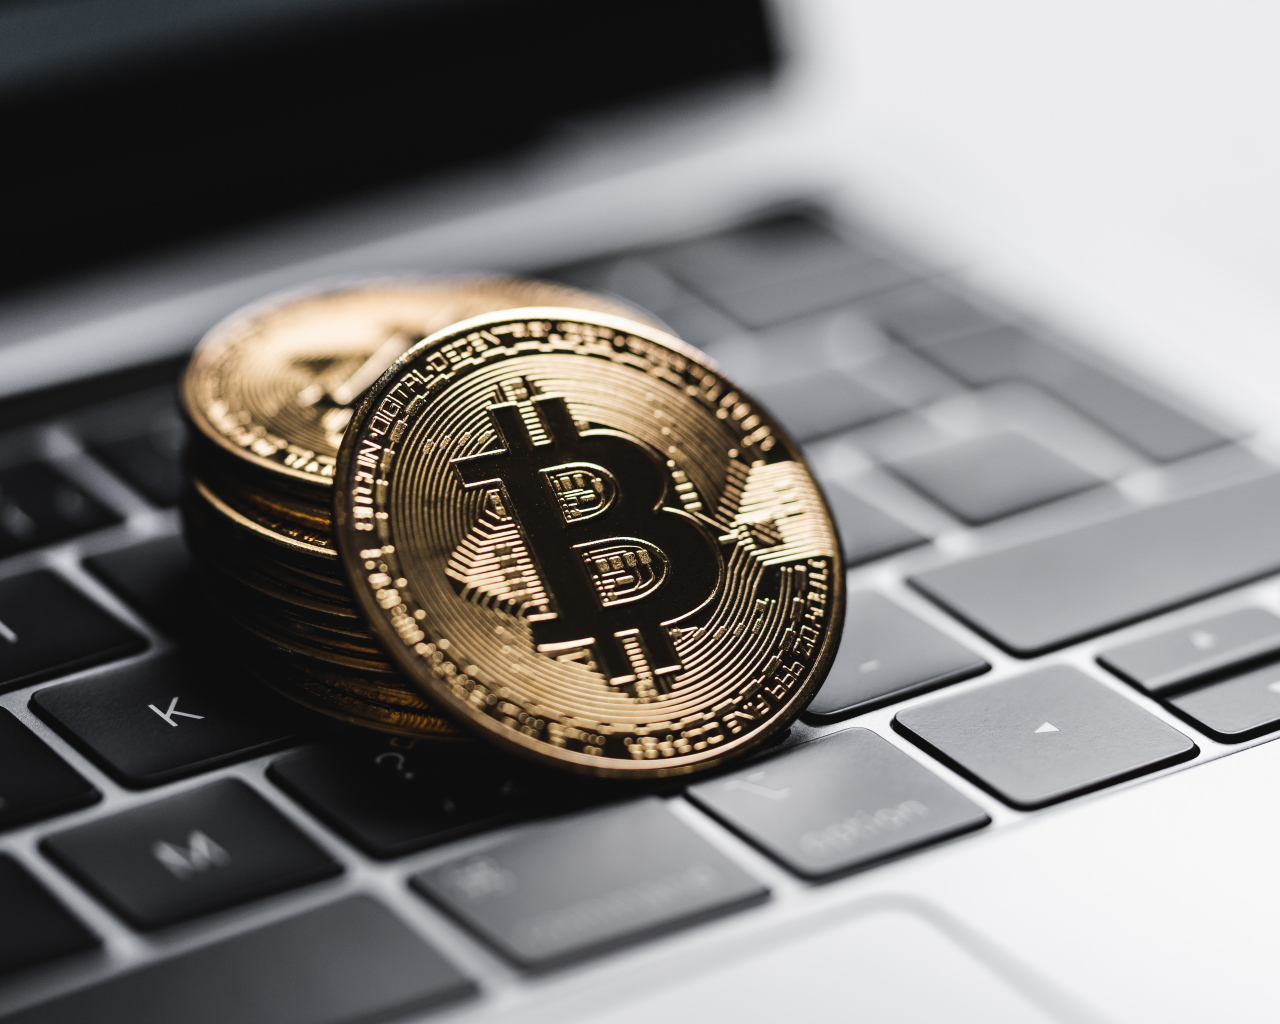 Bitcoin coins lie on a laptop keyboard